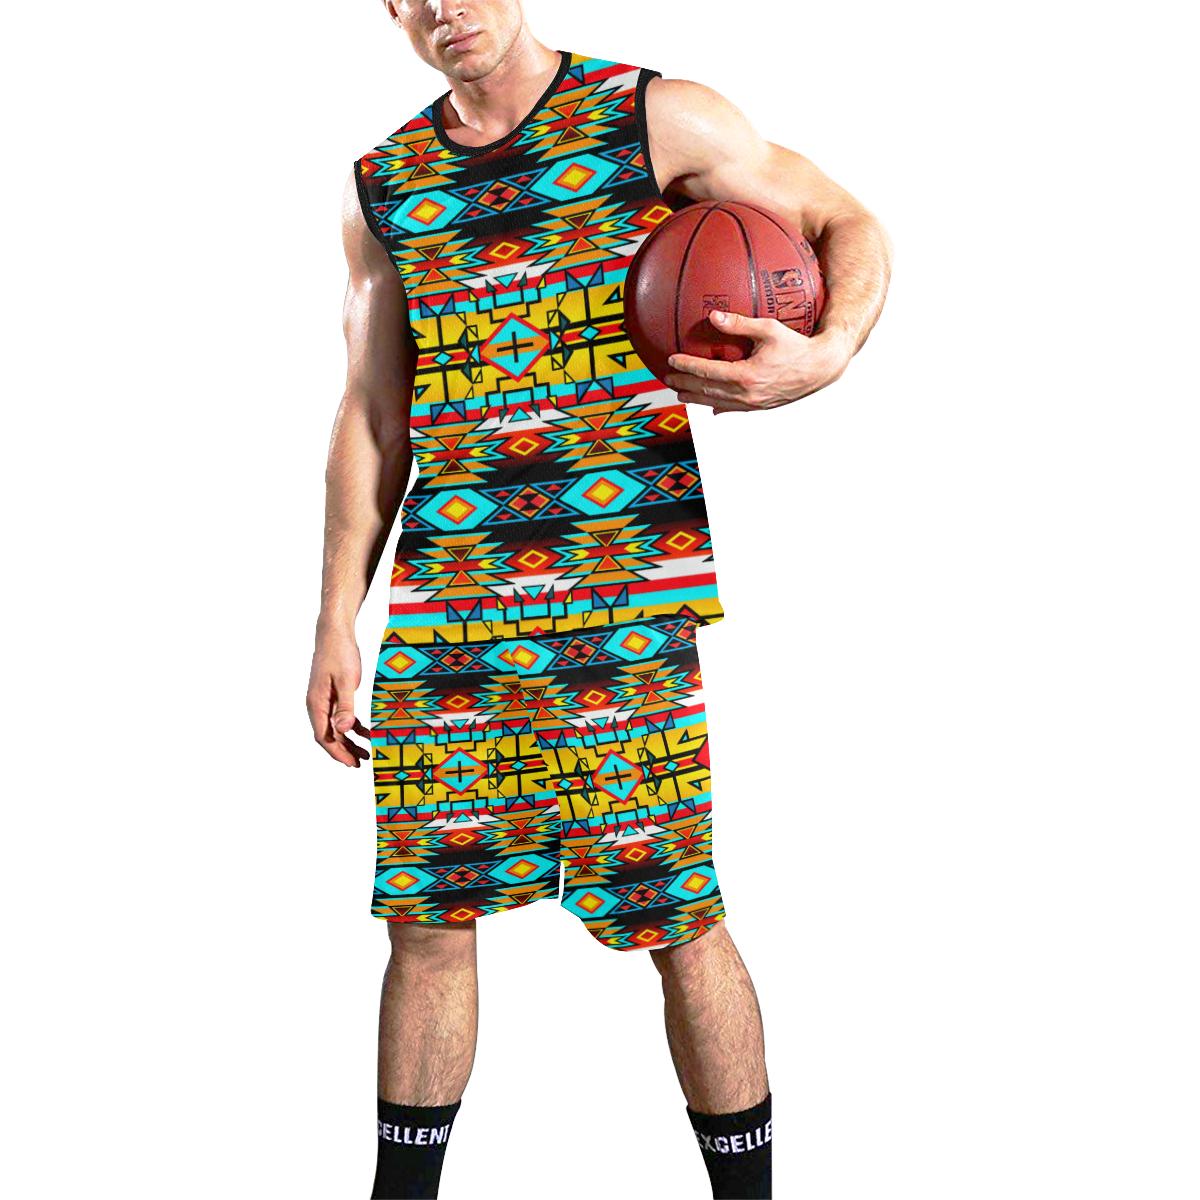 Force of Nature Twister All Over Print Basketball Uniform Basketball Uniform e-joyer 